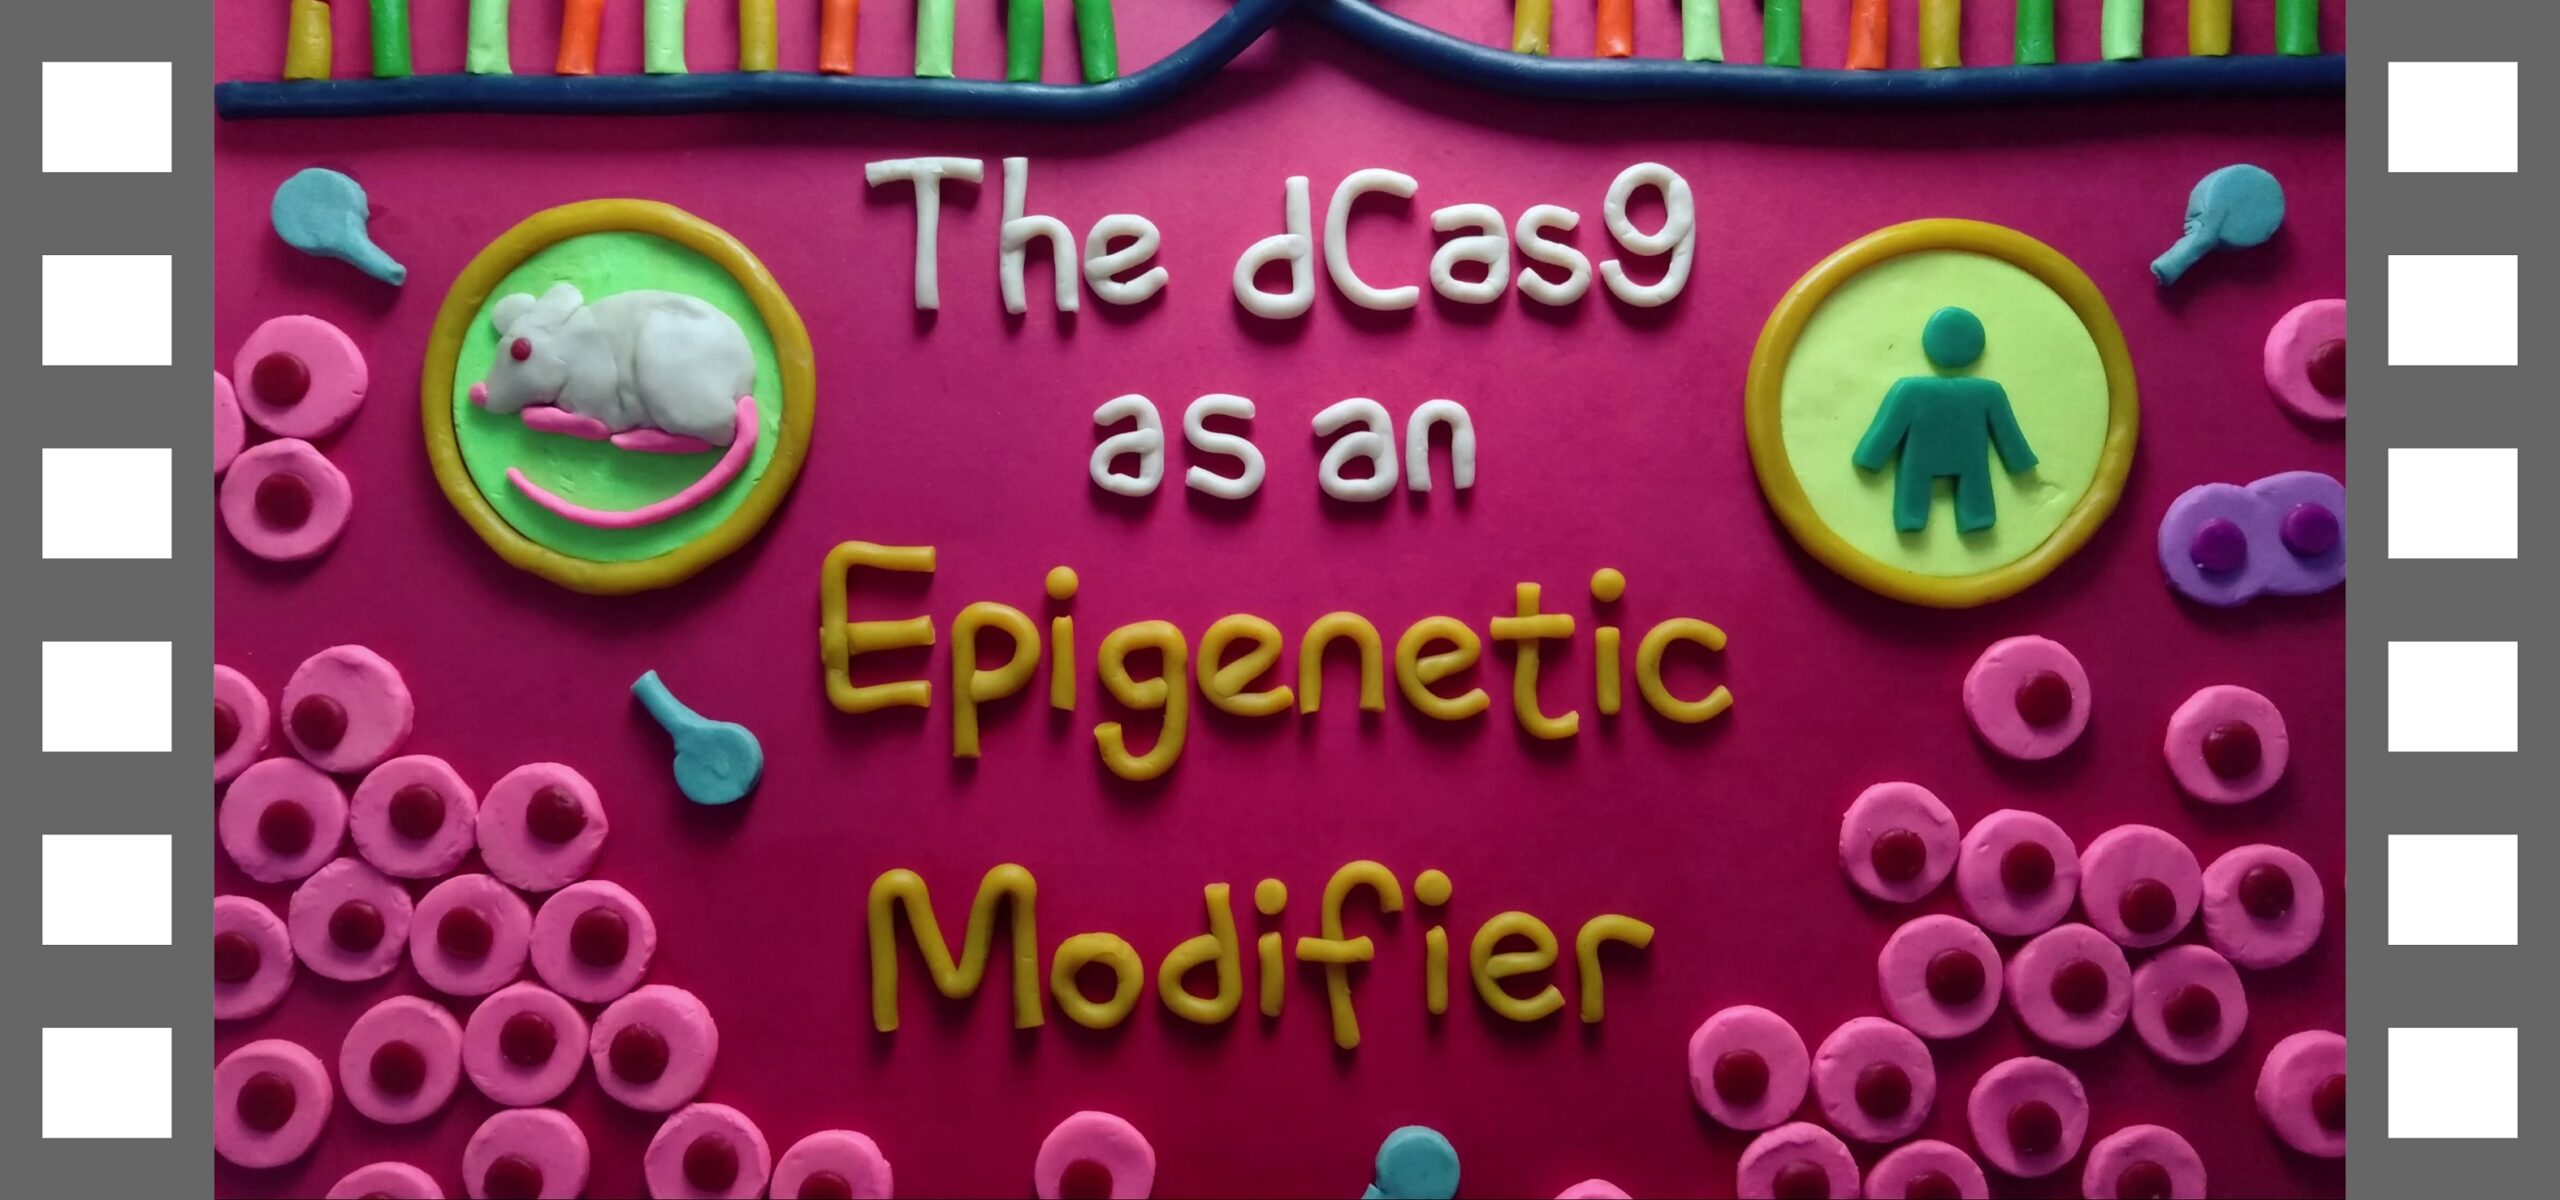 The World of CRISPR with Khalid! – dCas9 als epigenetischer Modifikator